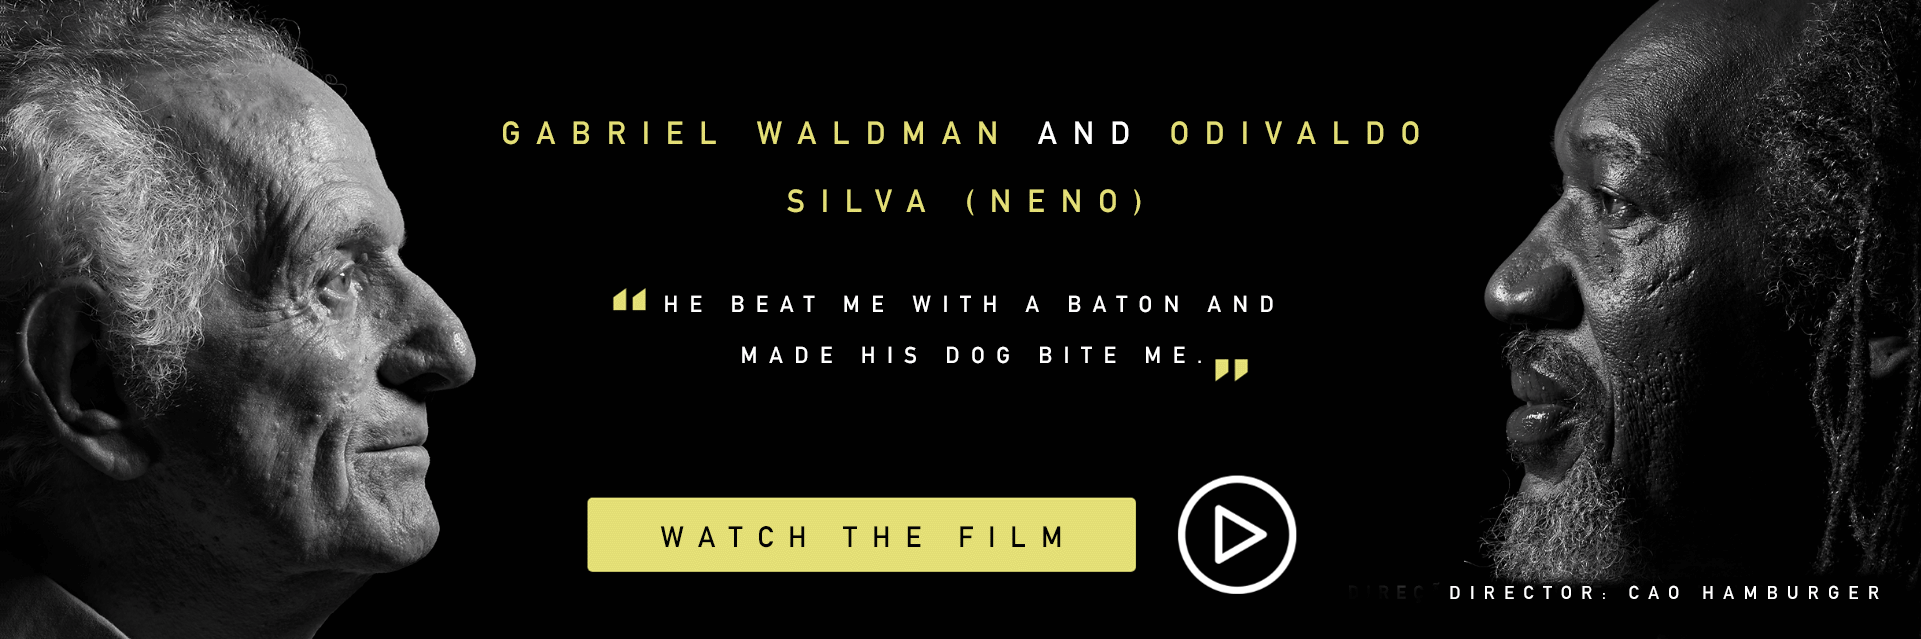 GABRIEL WALDMAN AND ODIVALDO SILVA (NENO). He beat me with a baton and made his dog bite me.  Watch the film. Director: Cao Hamburger.